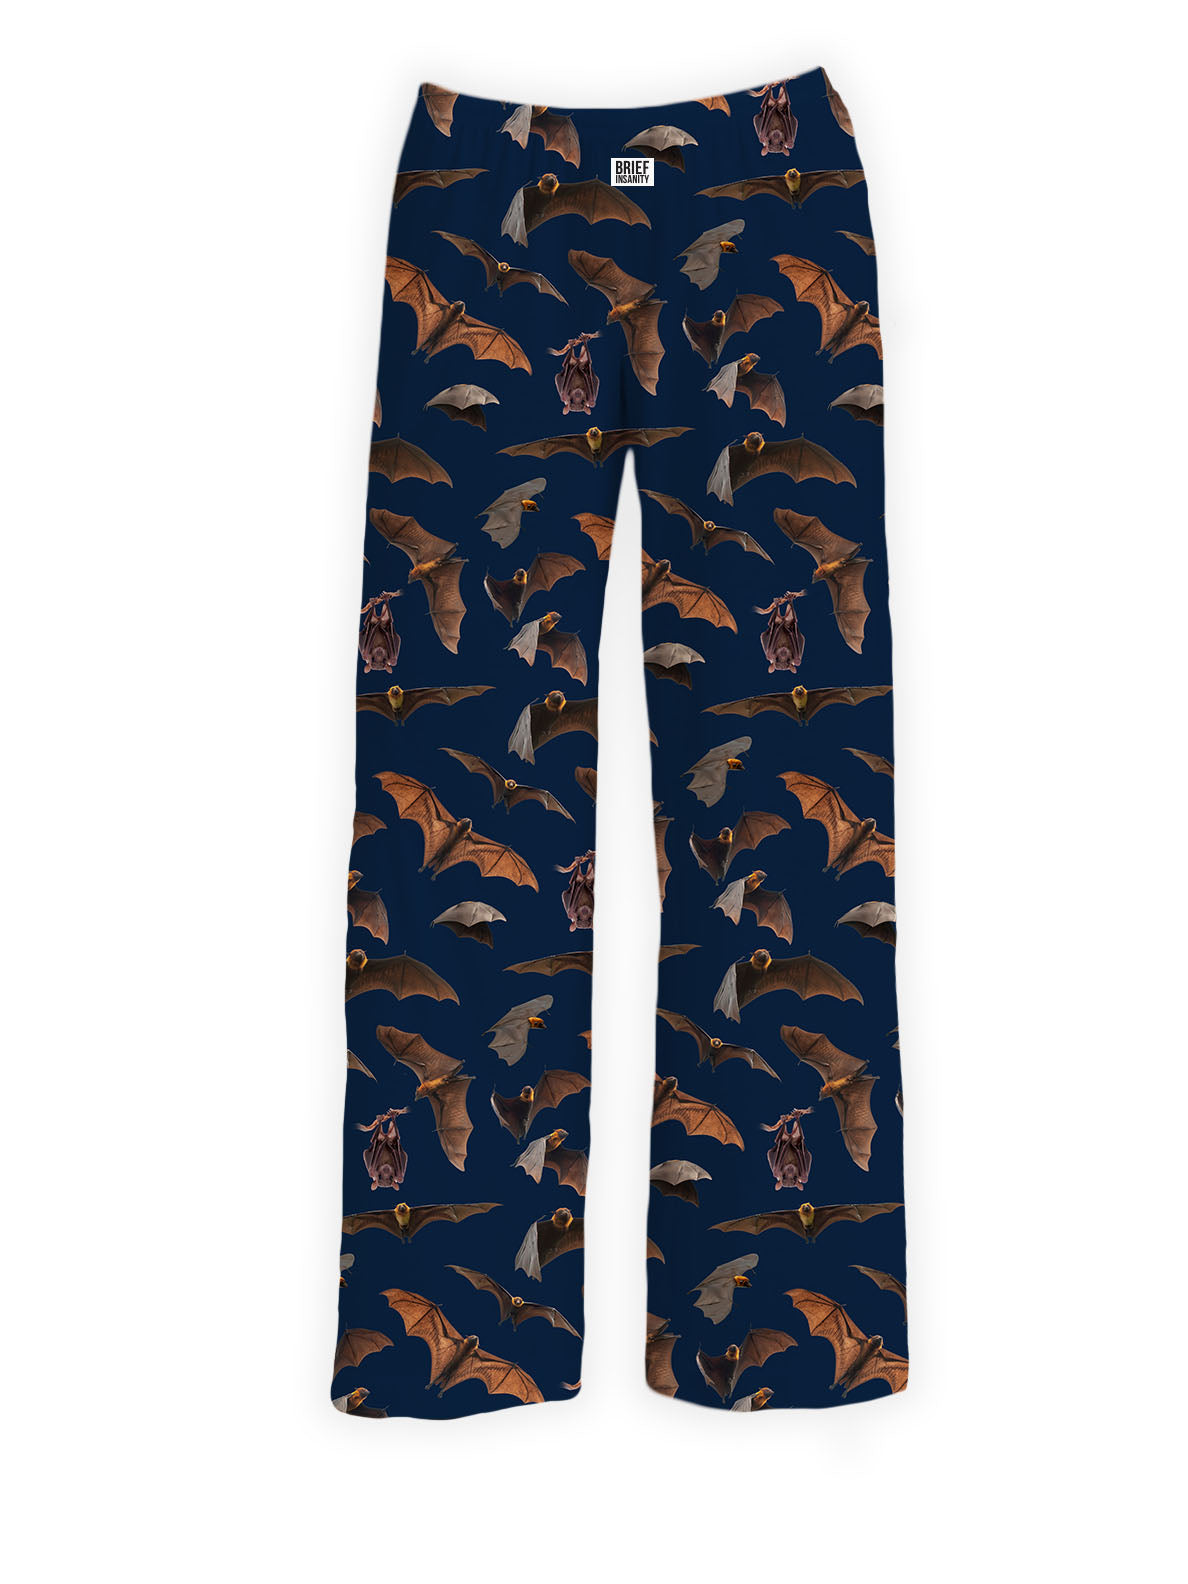 BRIEF INSANITY Bat Pattern Pajama Lounge Pants